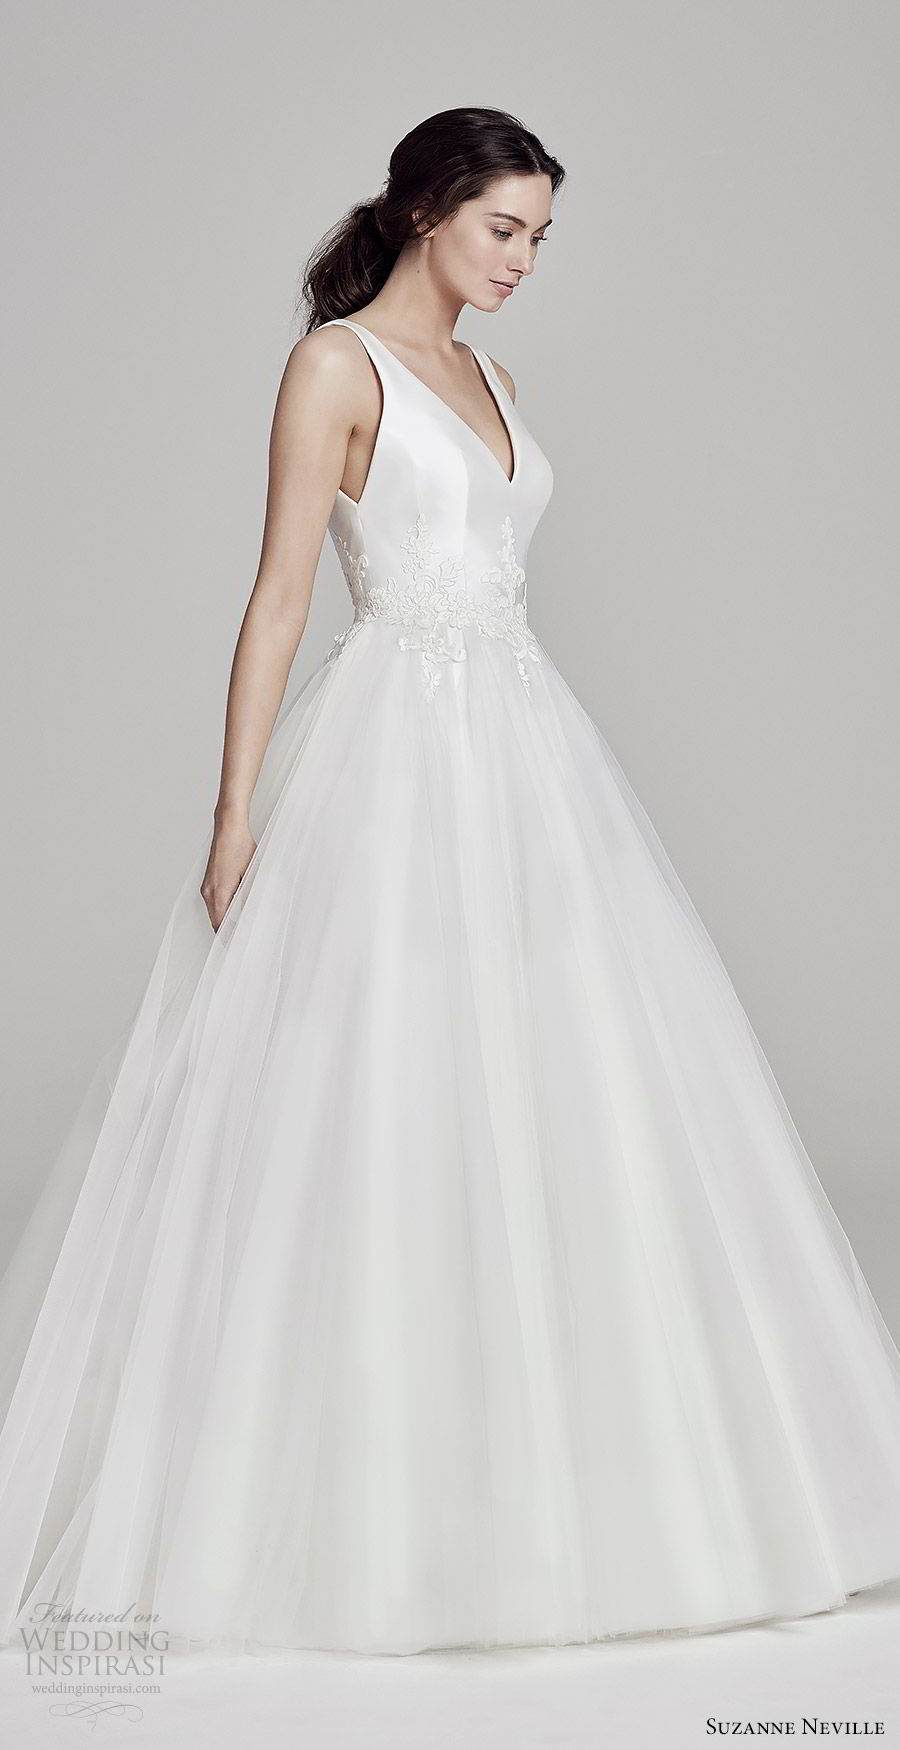 suzanne neville bridal 2019 sleeveless v neck embellished waist ball gown wedding dress (ines) romantic princess mv